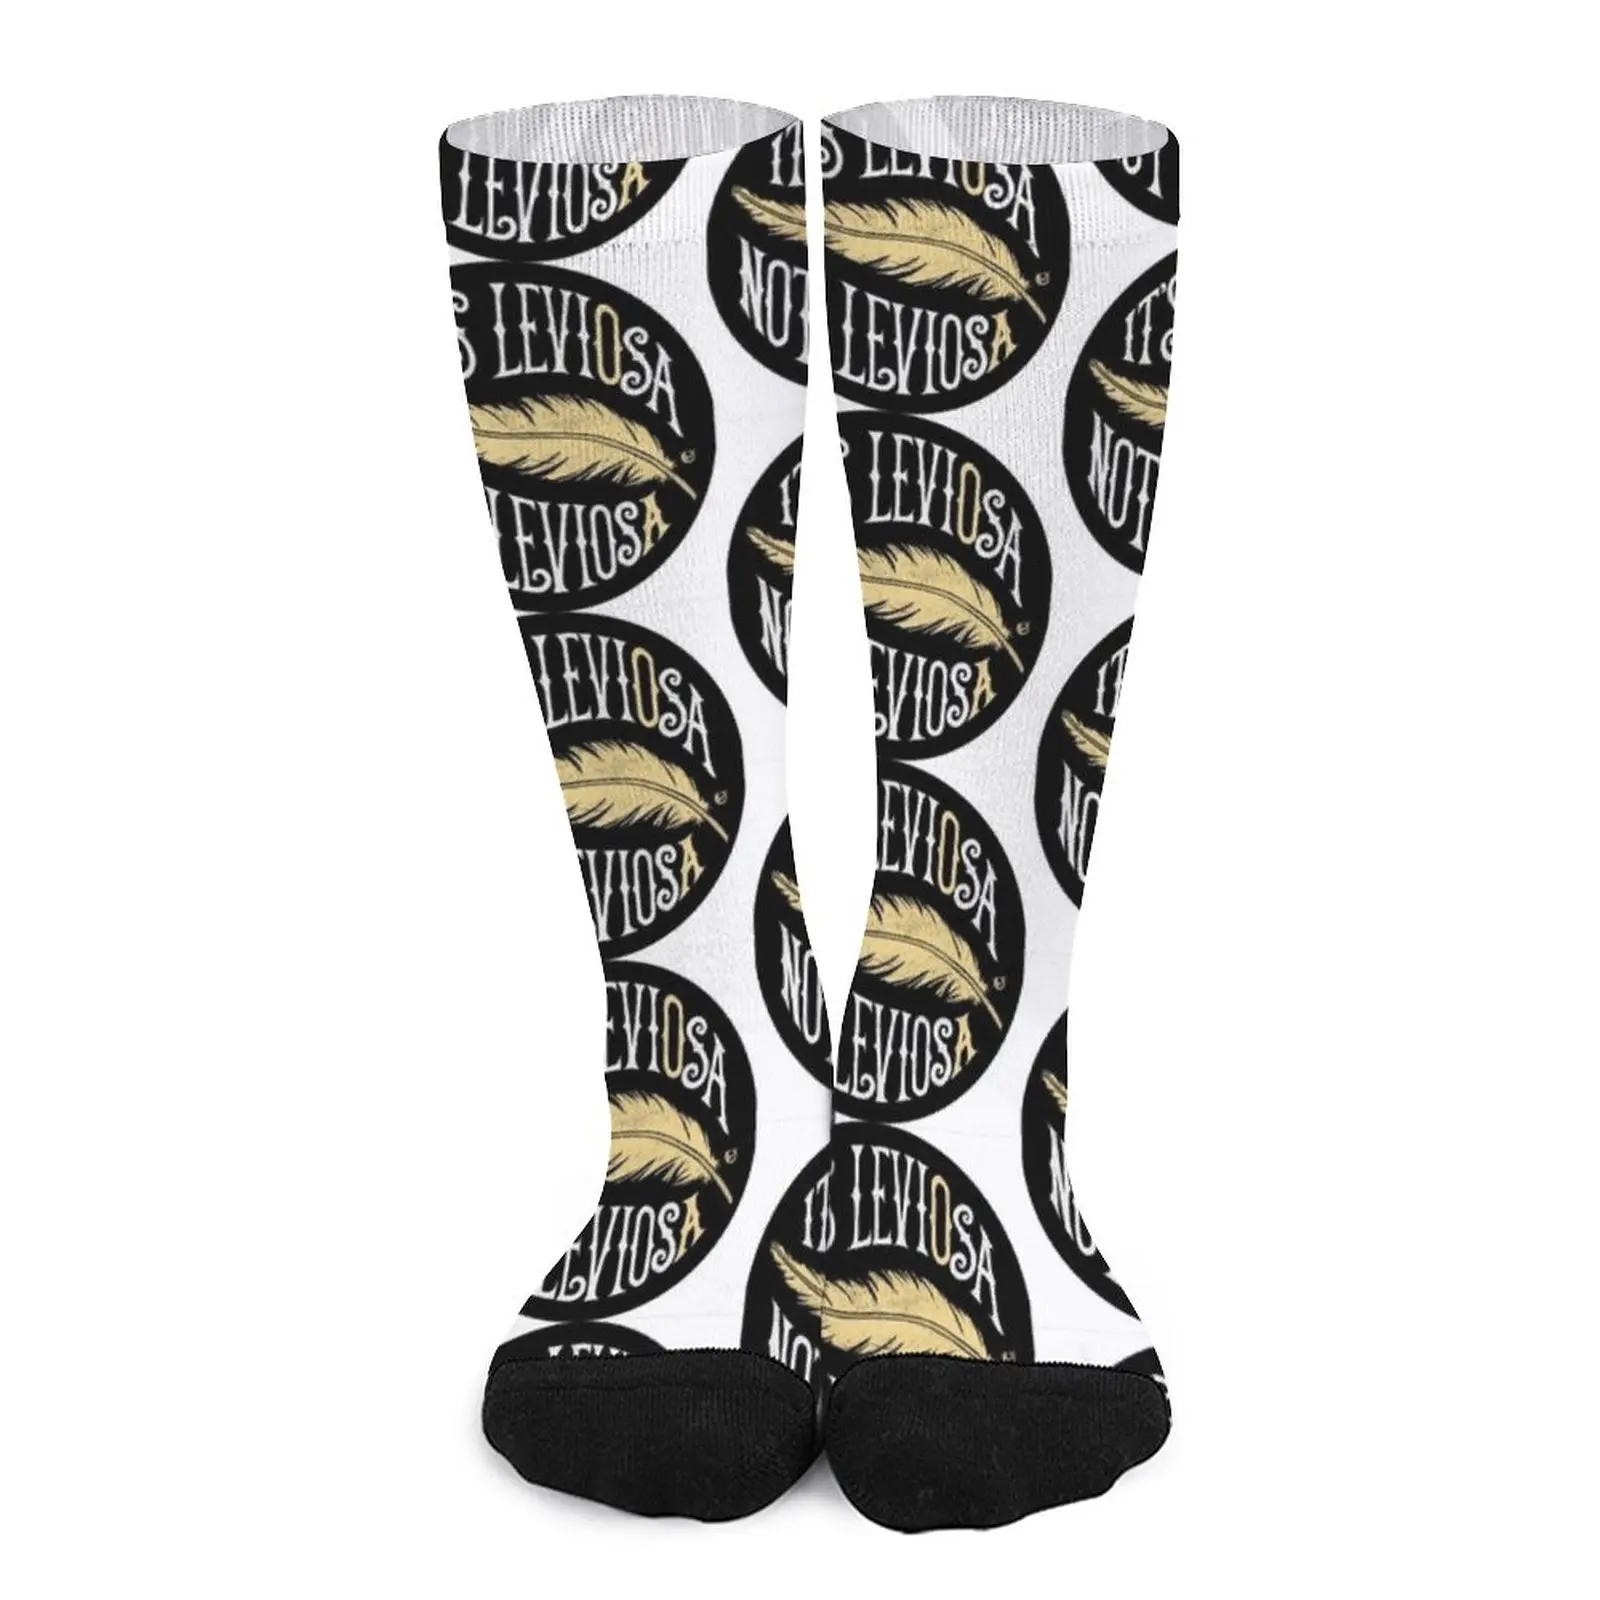 It’s LeviOsa not LeviosA Socks Men′s sock cool socks socks man mcgill university icon socks cool socks men s sock